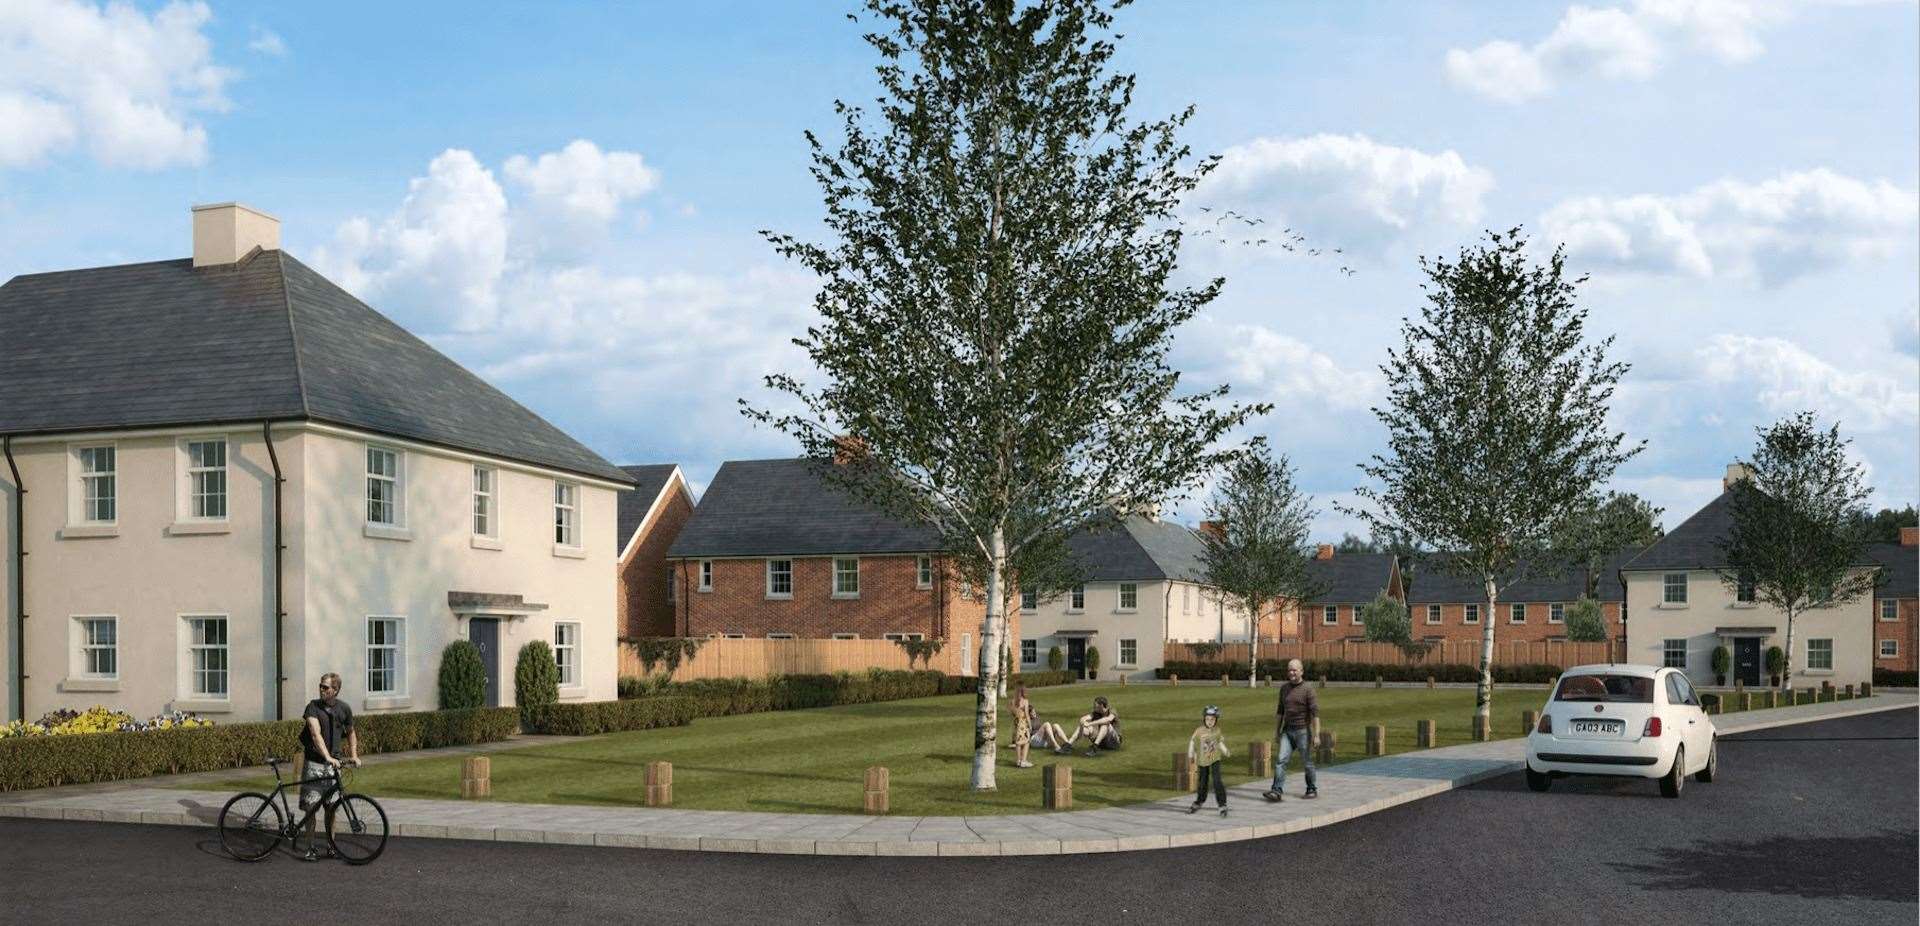 Pictures revealed of Quinn Estates’ plans for new homes at Cottington Park